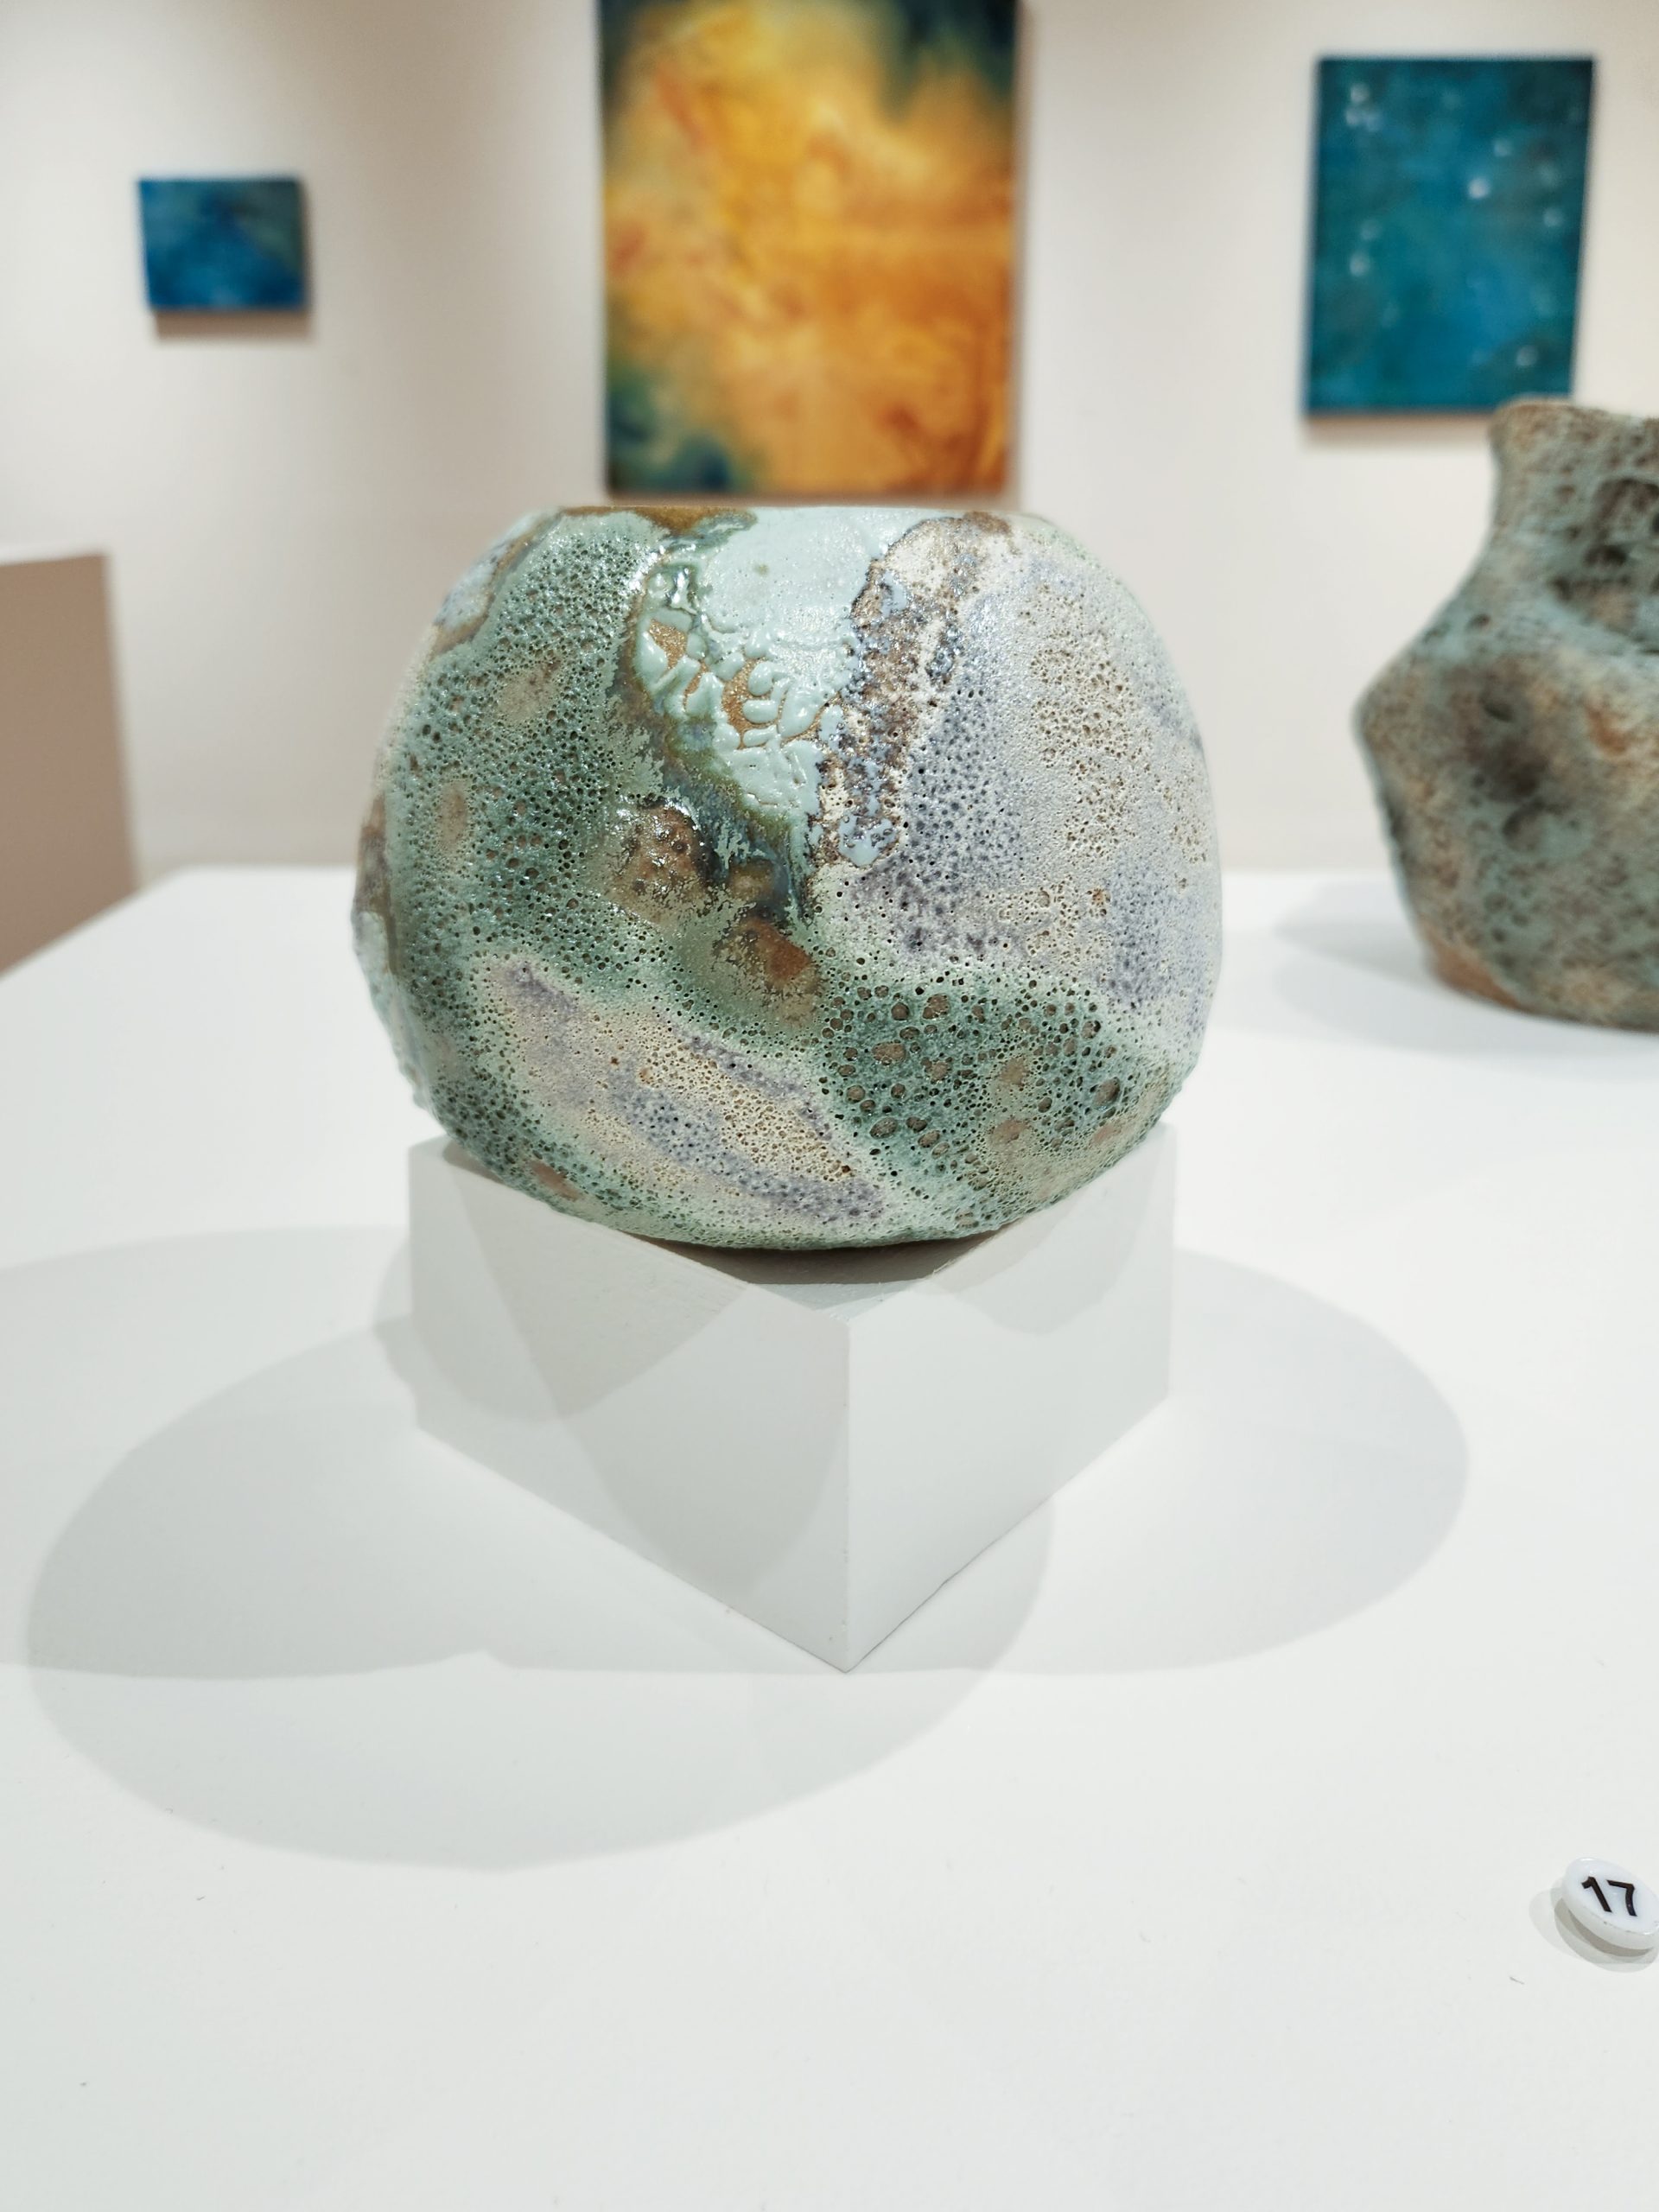 Krystal Yavicoli, "Lush," 2023. Ceramic and glaze, 4 x 5 x 5 in.